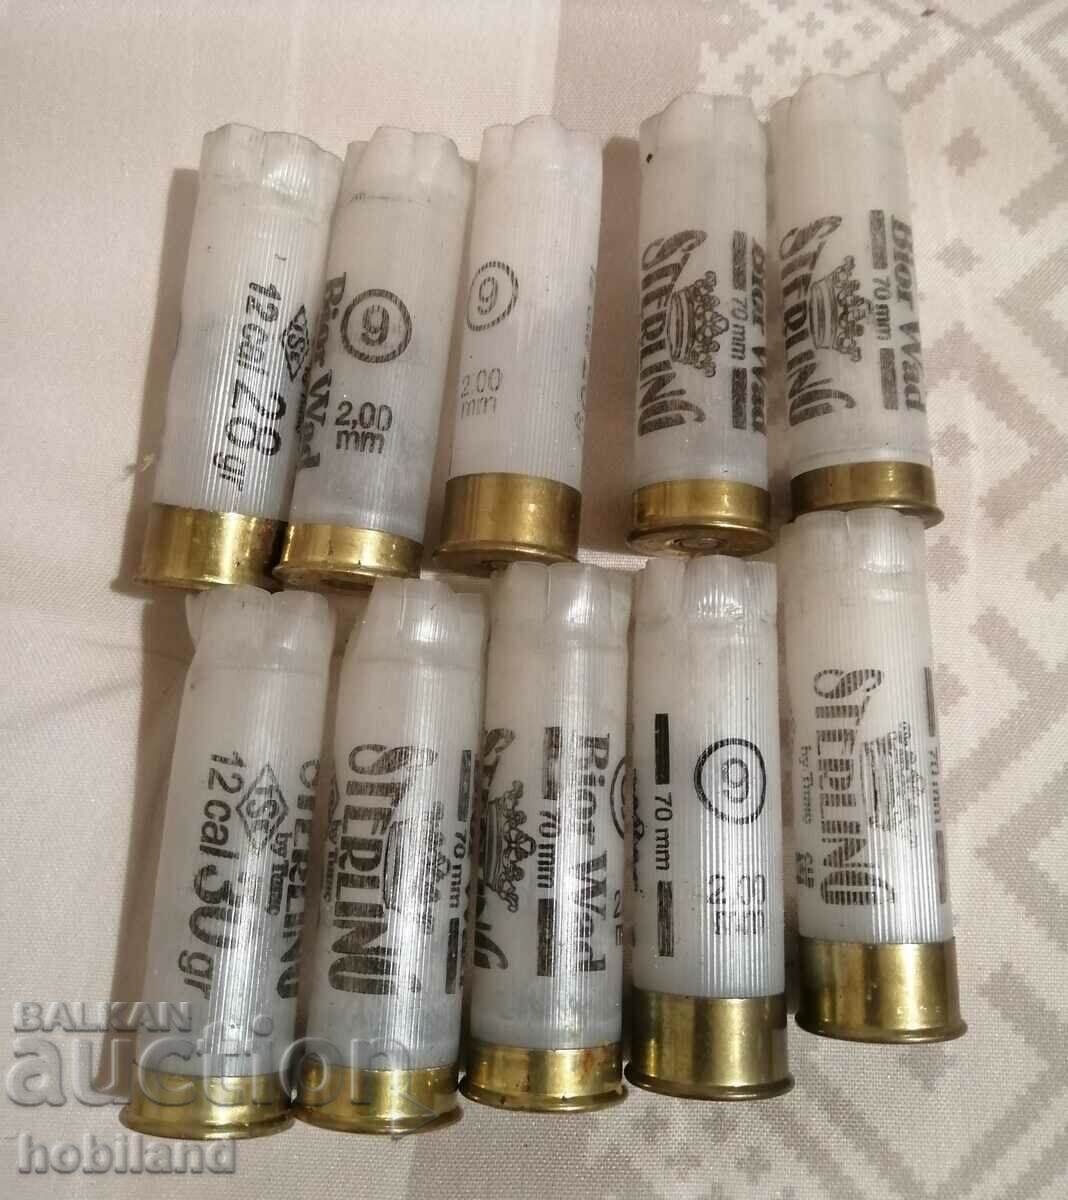 12 gauge cartridges